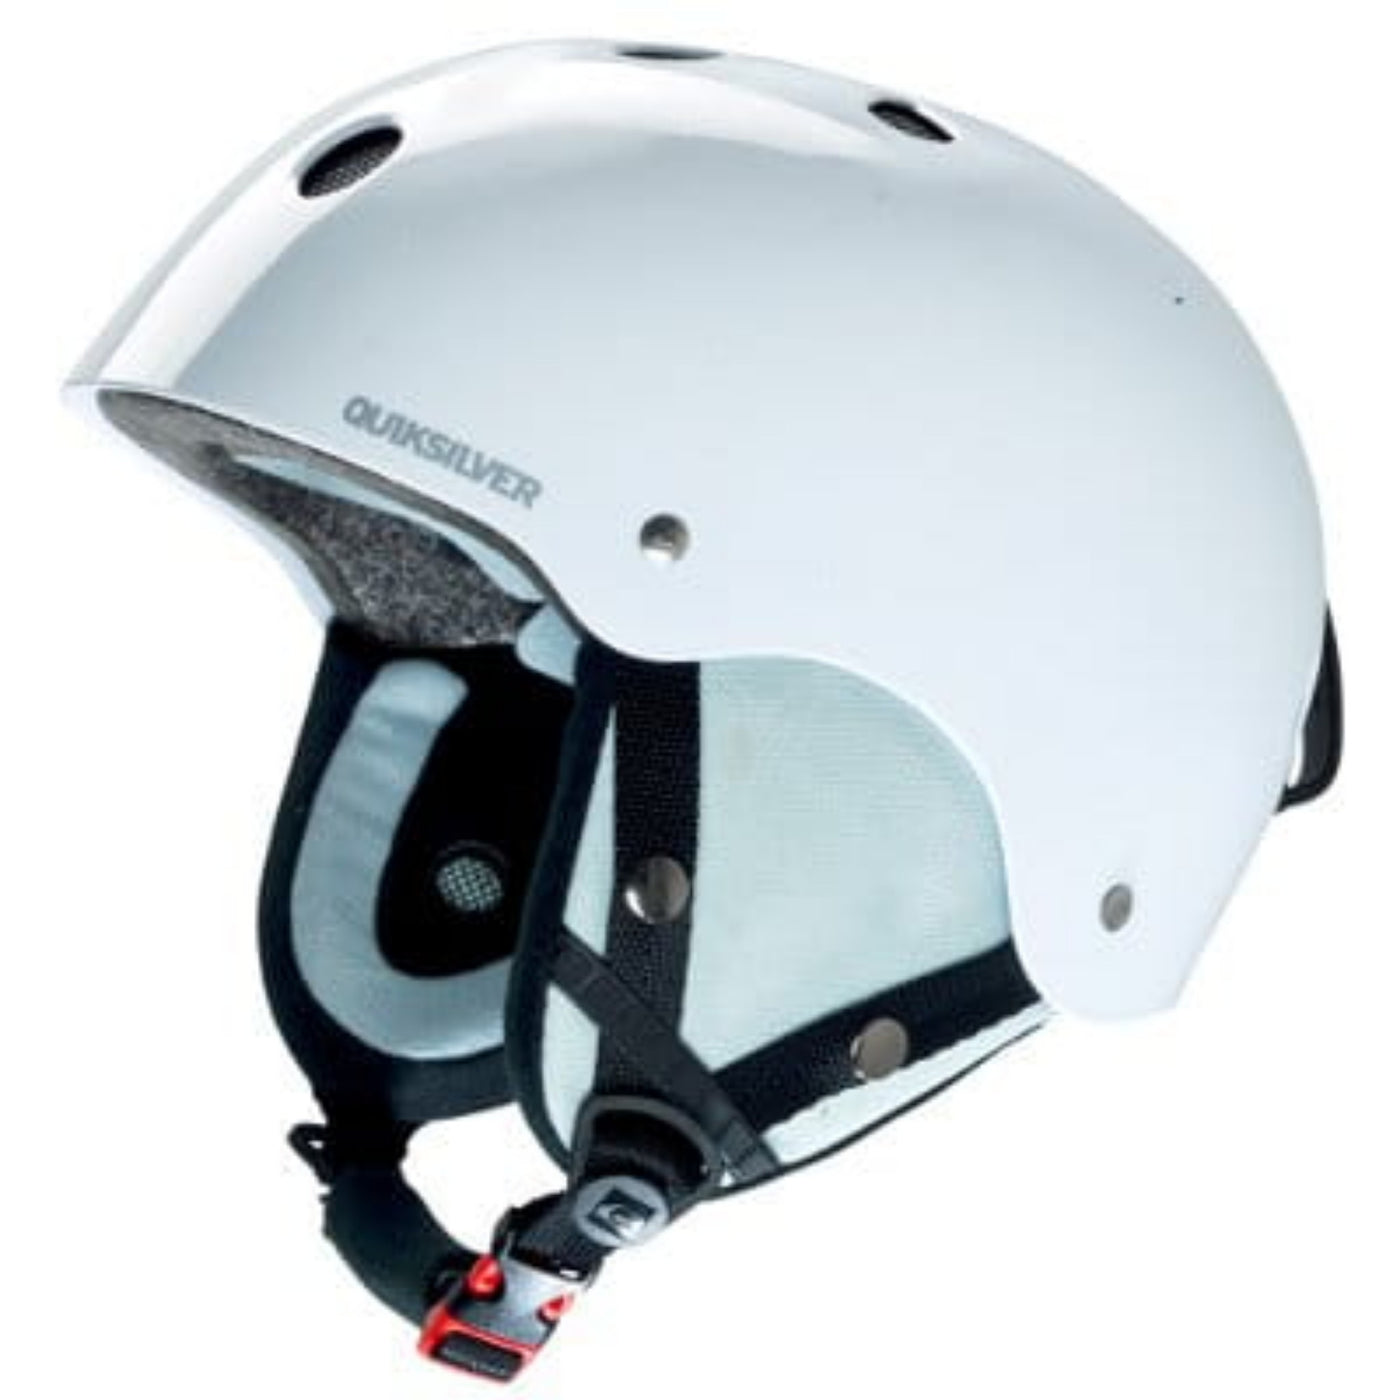 Quiksilver Onyx Youth Snow Helmet - White